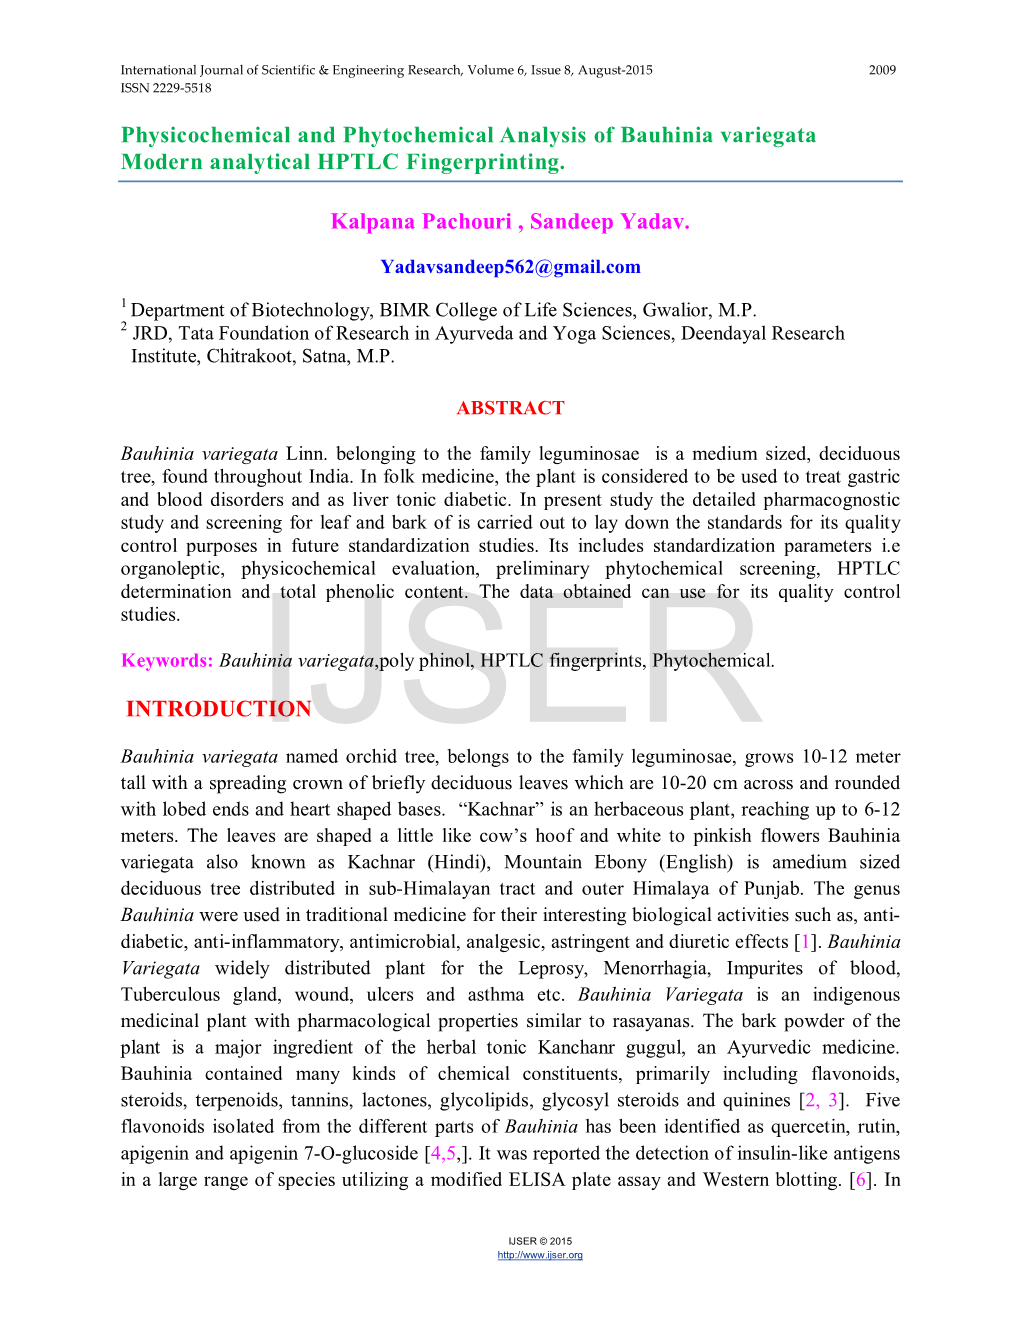 Physicochemical and Phytochemical Analysis of Bauhinia Variegata Modern Analytical HPTLC Fingerprinting